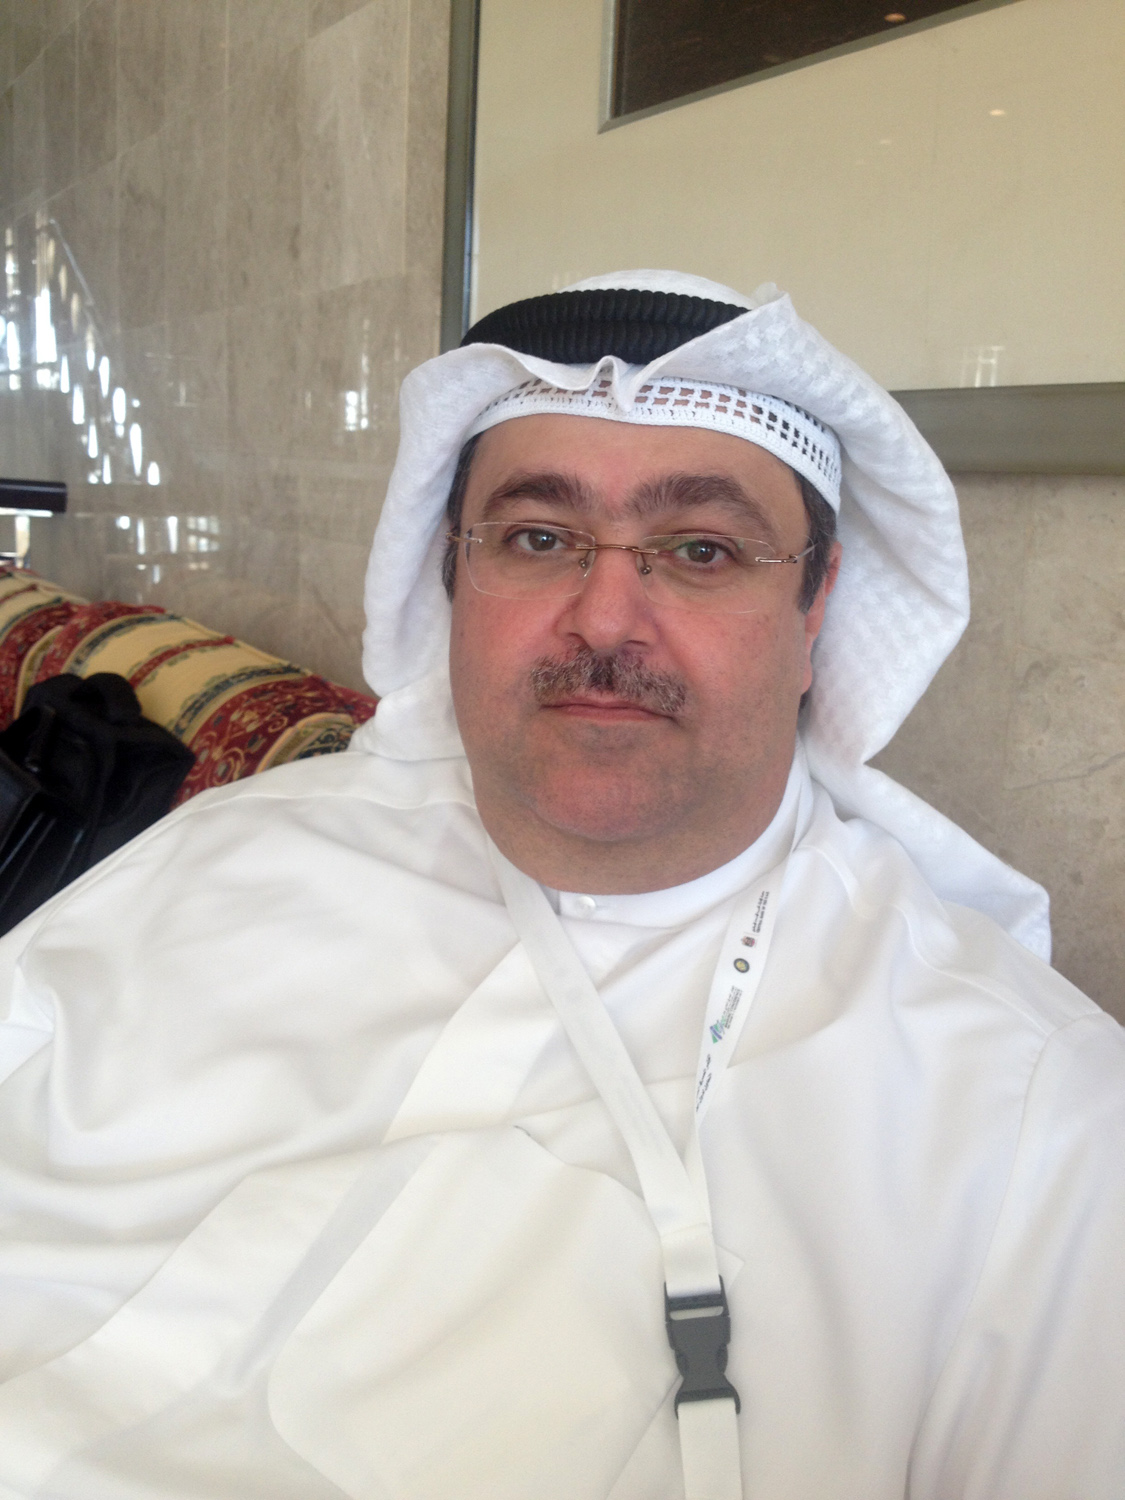 Kuwait International Bank's Chief Executive Officer Loai Maqames